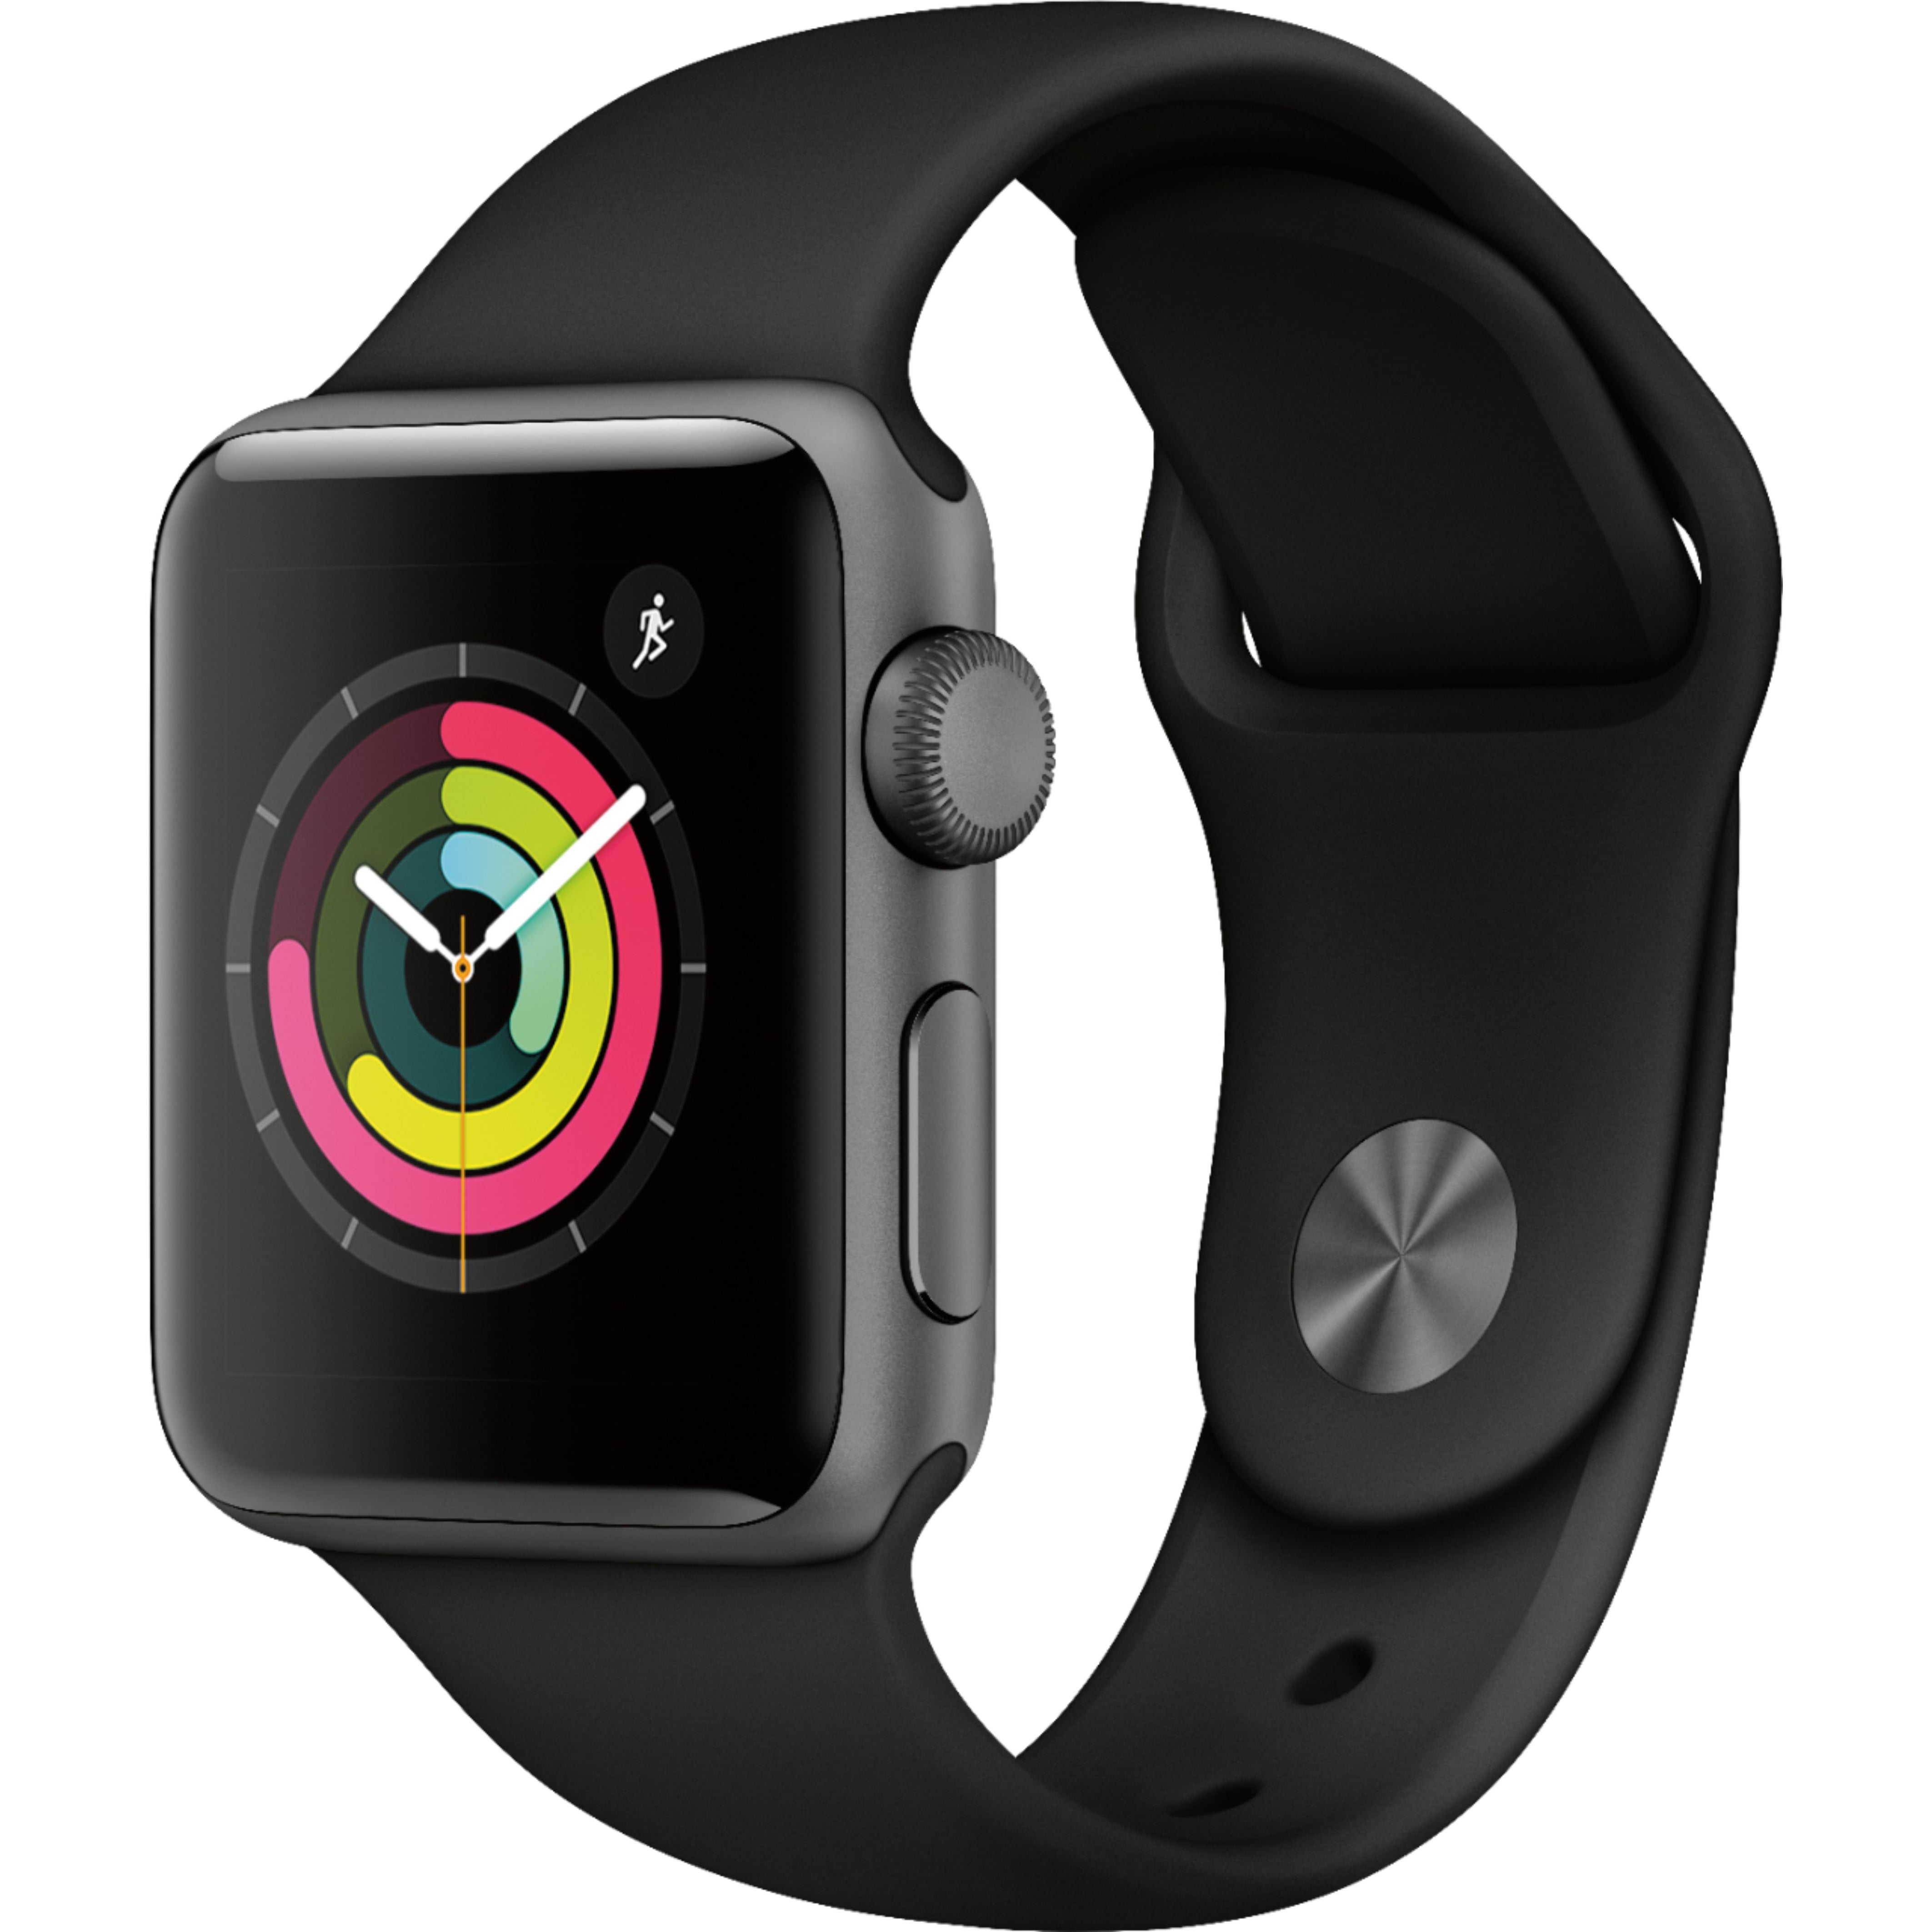 Apple watch sport цена. Apple watch s3 38mm Space Gray. Часы эпл вотч 3. Apple watch s3 42mm Space Grey. Apple watch 3 42 mm.